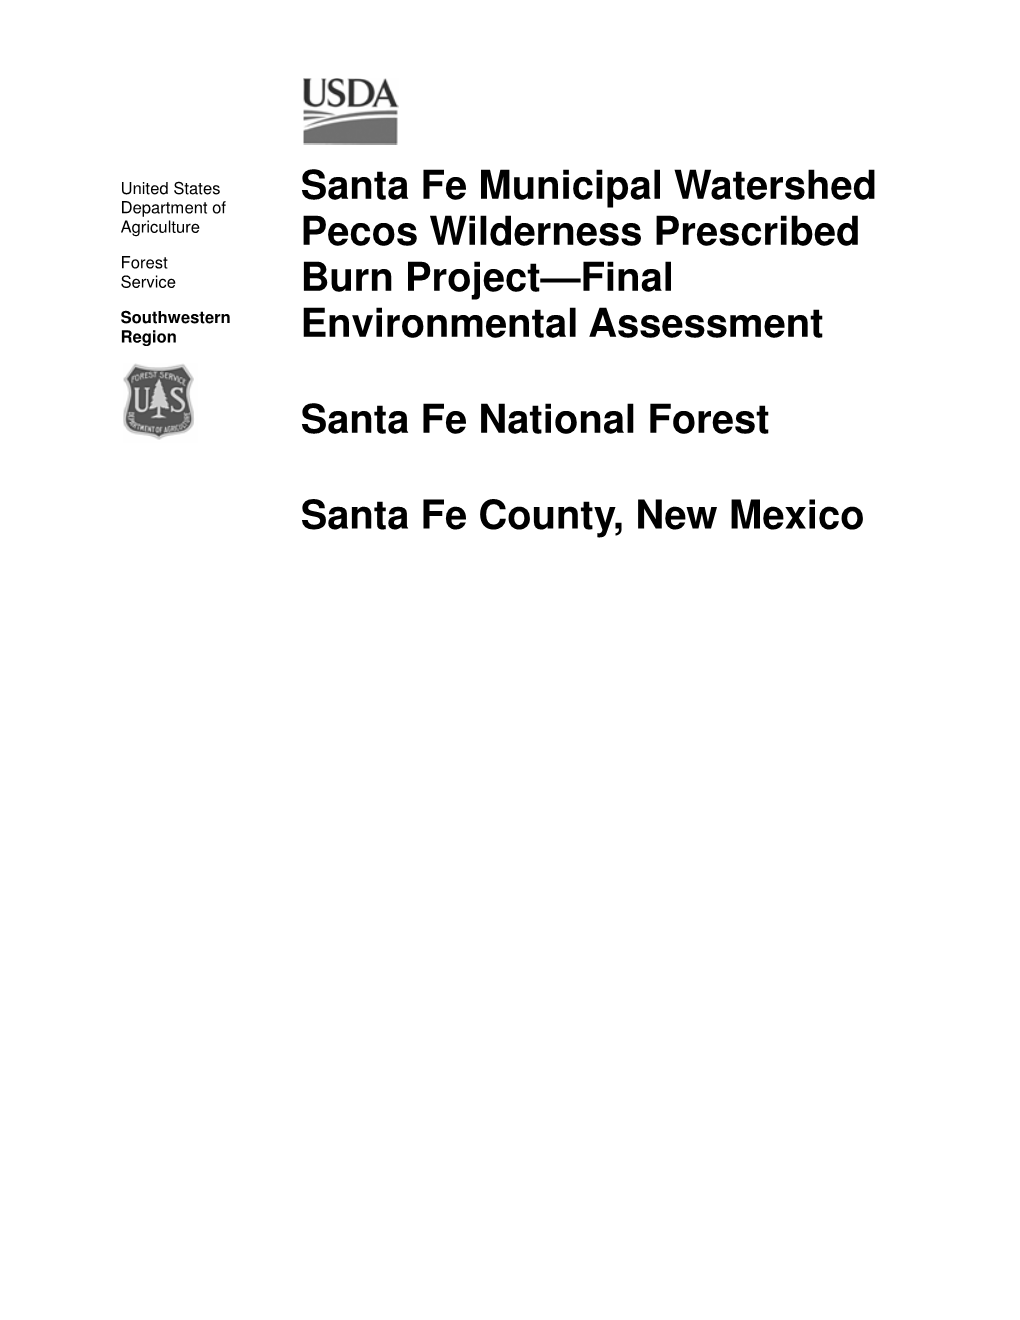 Santa Fe Municipal Watershed Pecos Wilderness Prescribed Burn Project